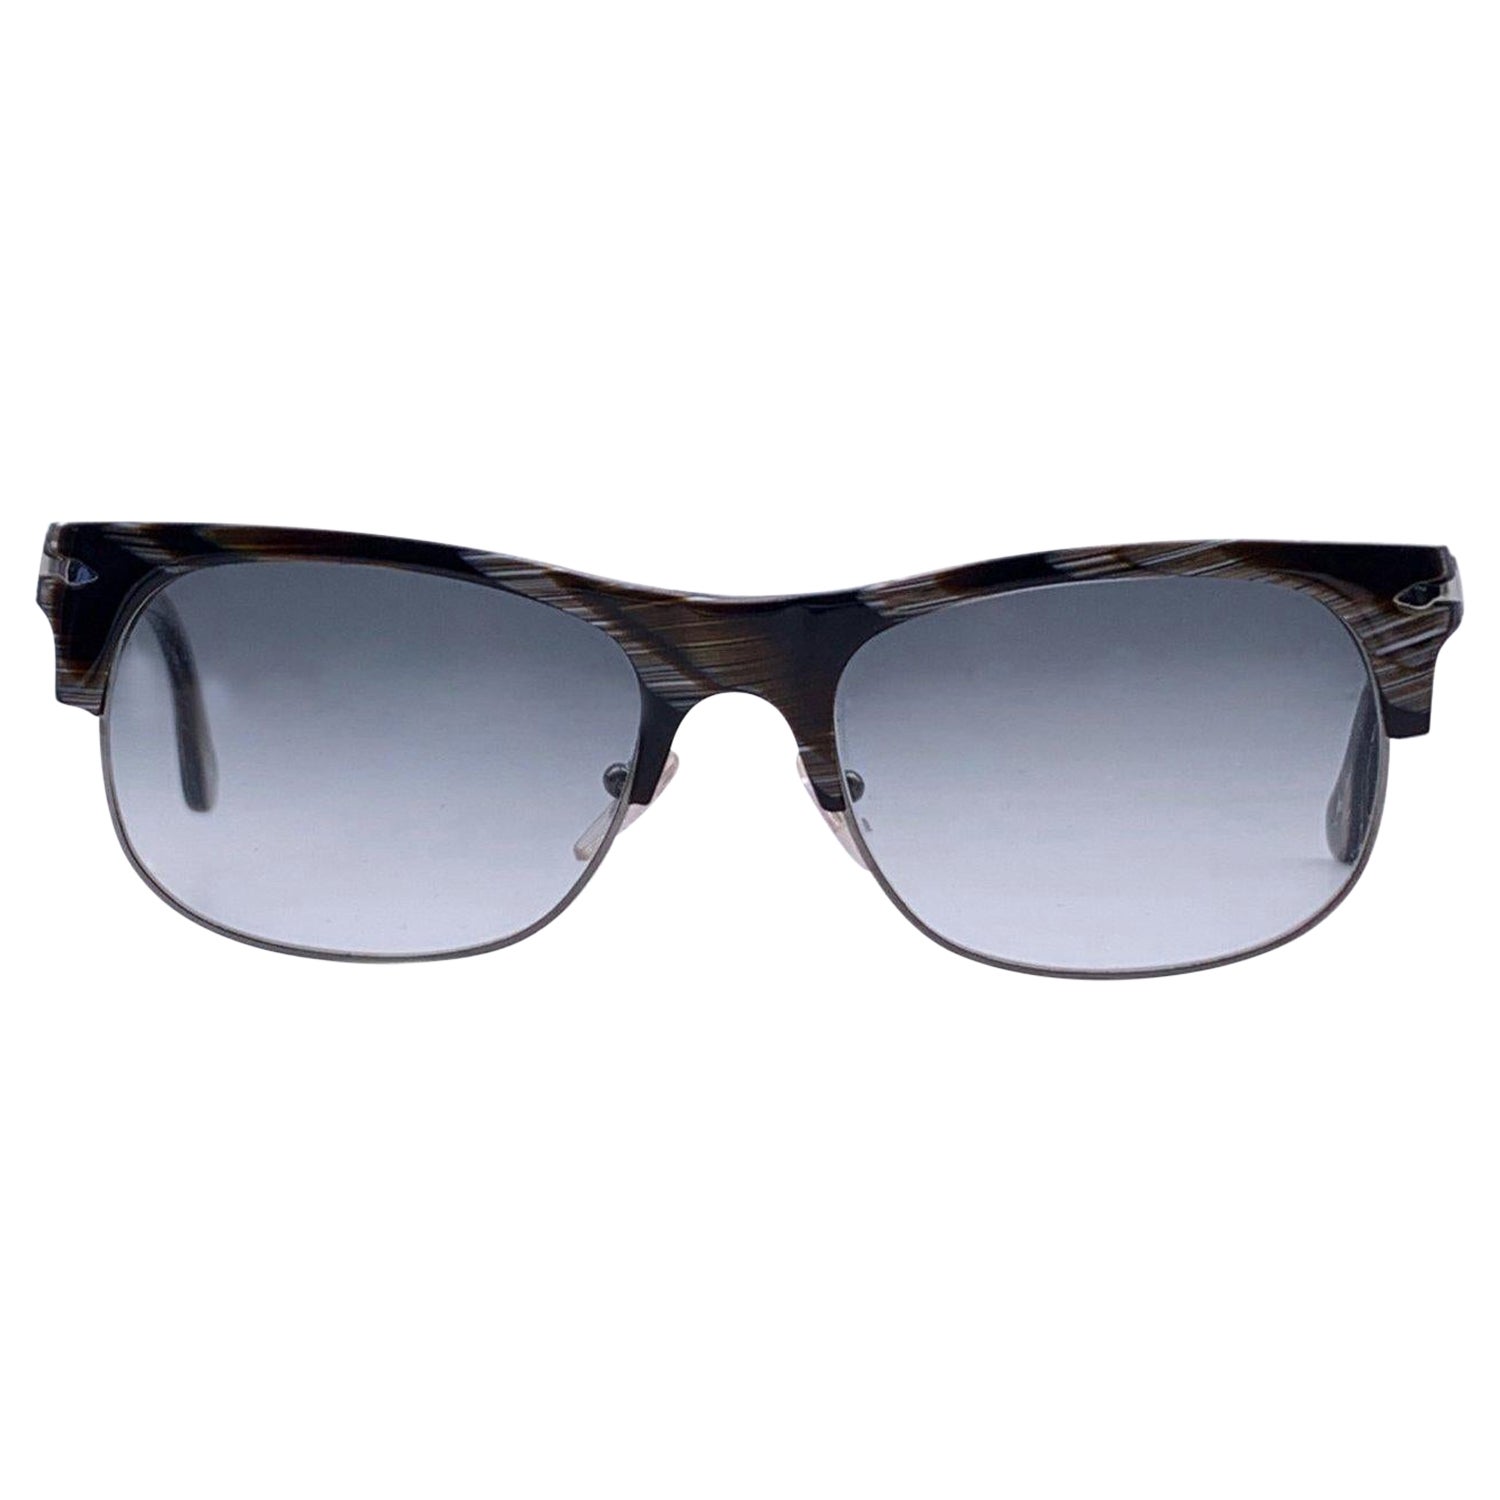 Persol Ratti Vintage Brown Striped Sunglasses Mod. 3034-S 53/18 145mm